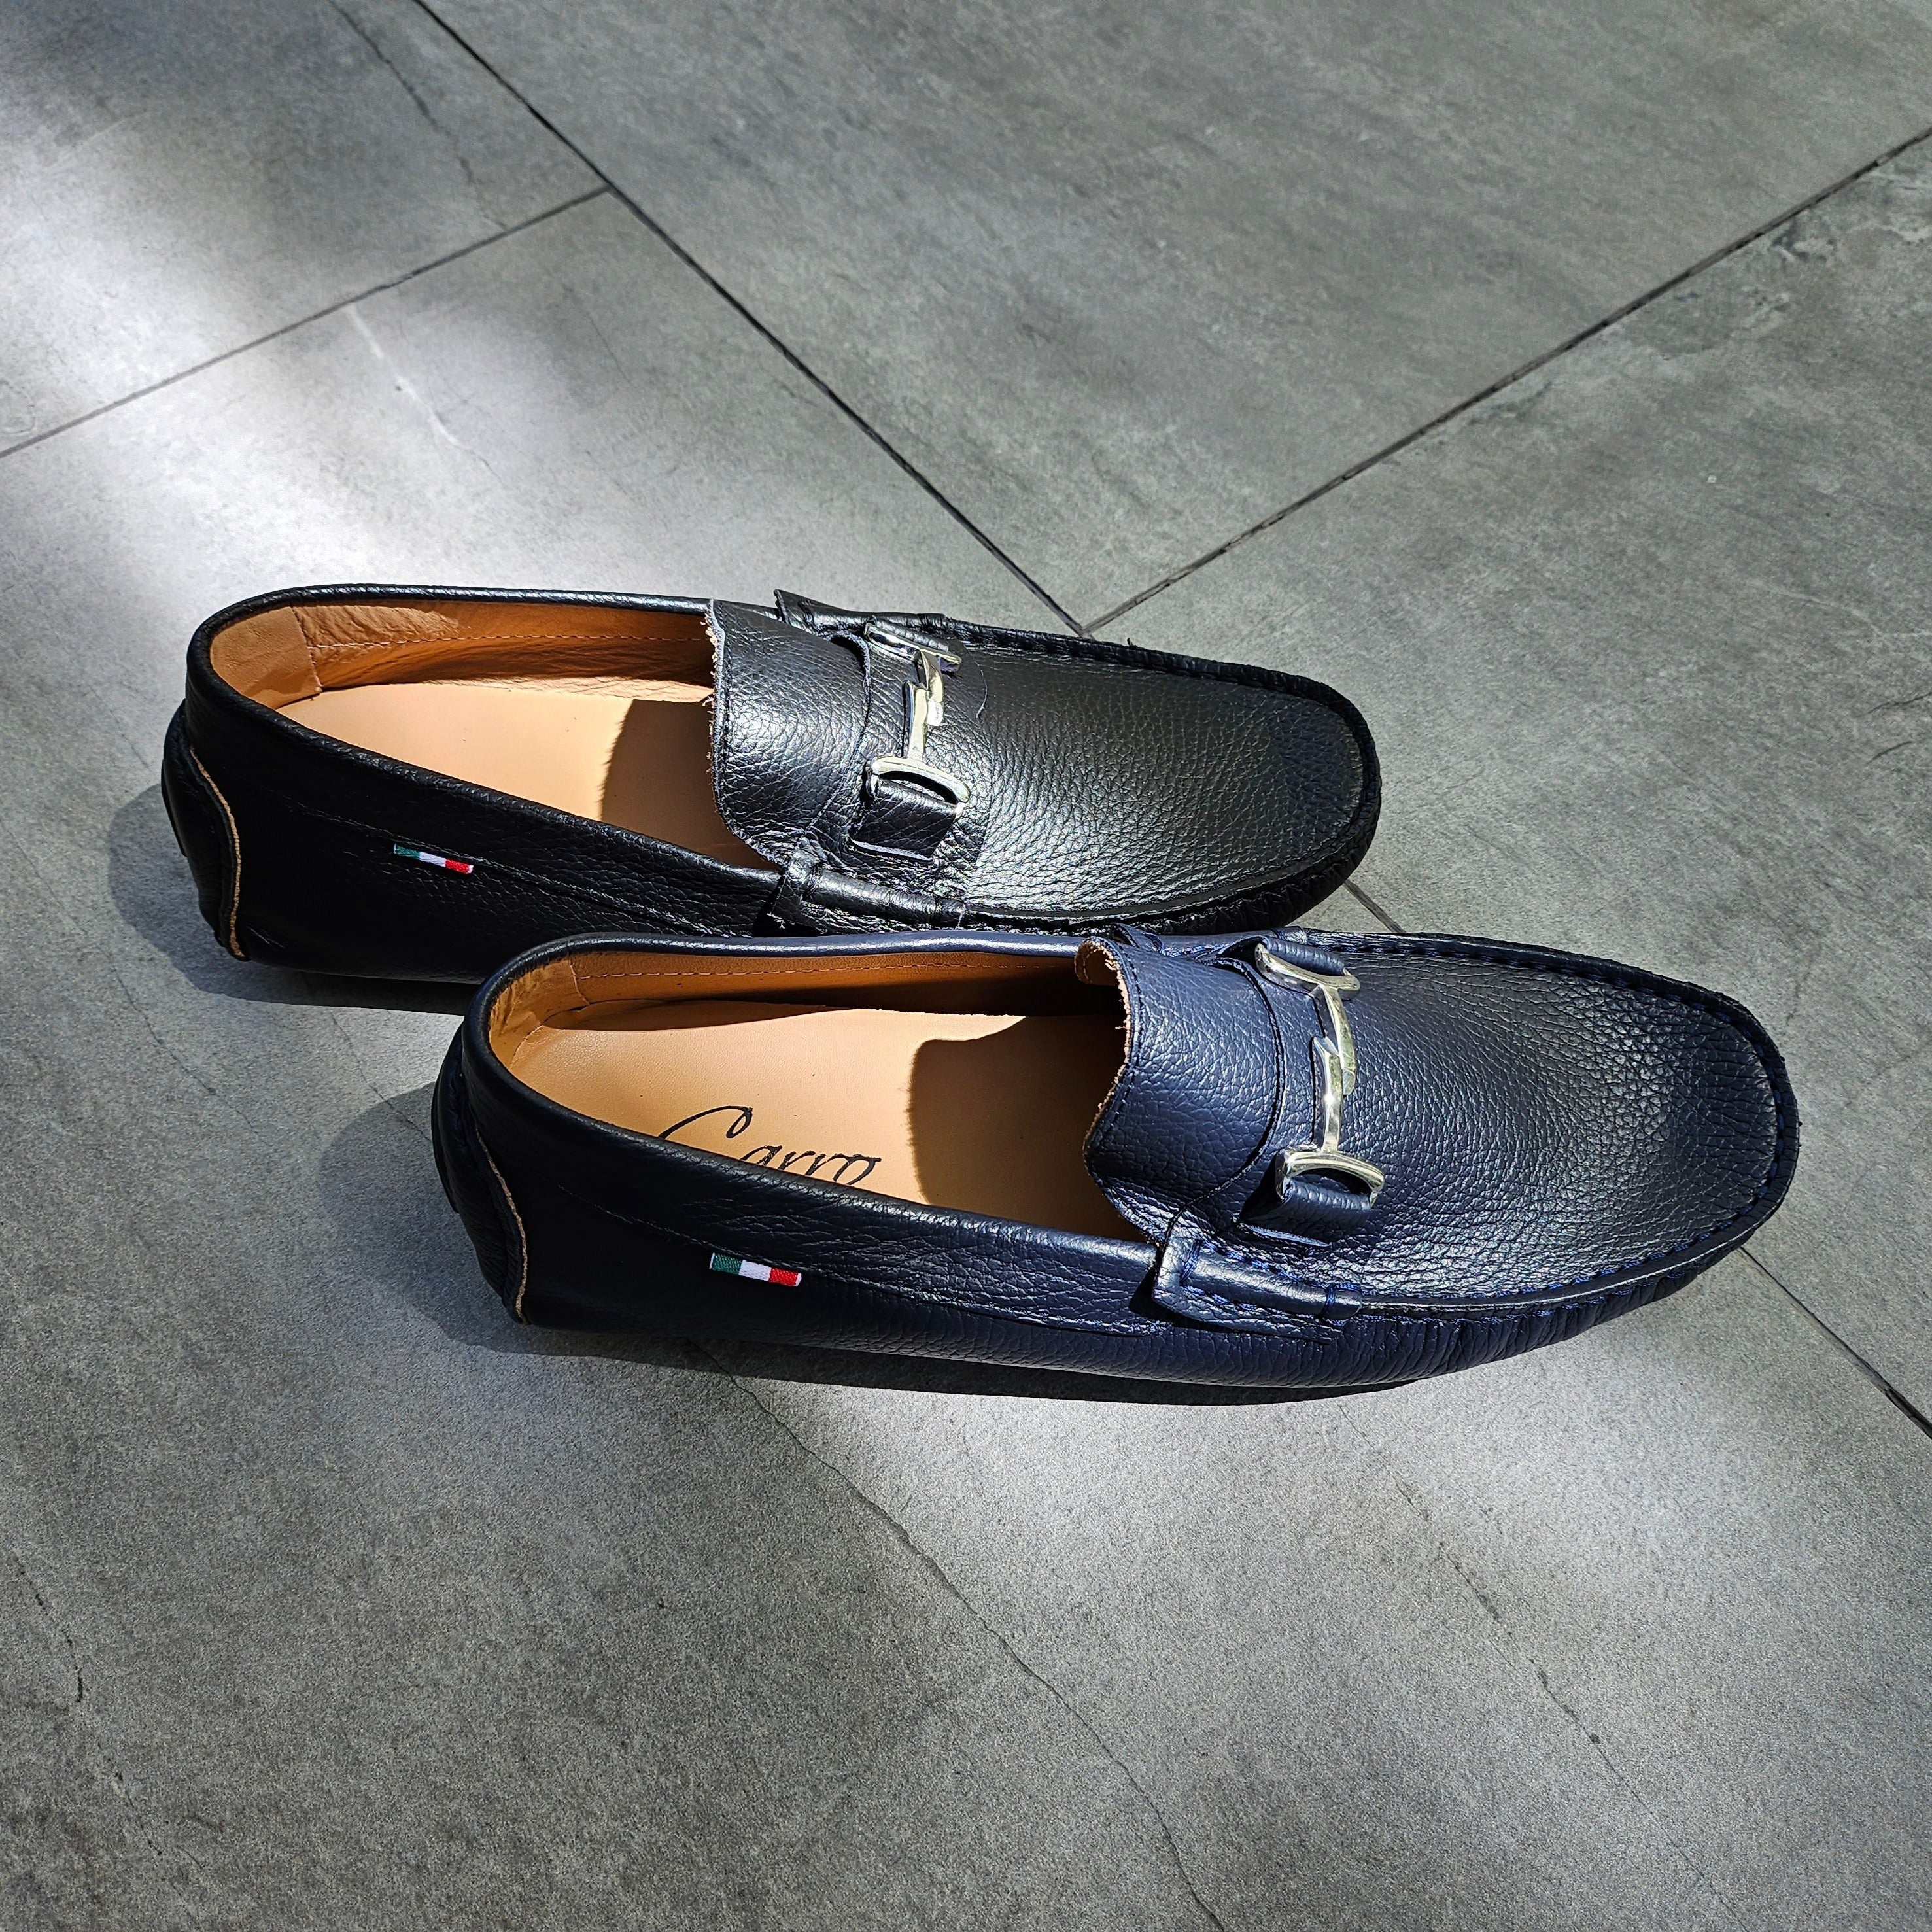 Carro Positano Mens Premium Italian handmade Leather Chain loafers